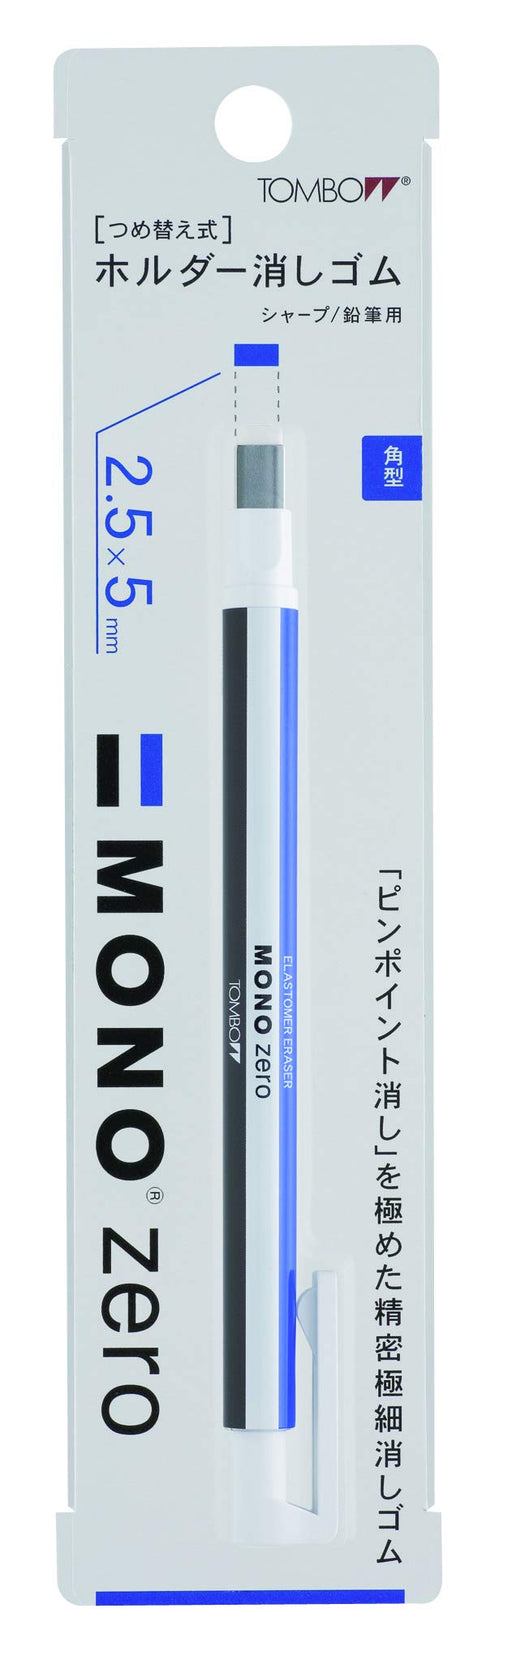 Tombow MONO ZERO Eraser Holder Square Stripe EH-KUS Knock Type for Drafting NEW_2